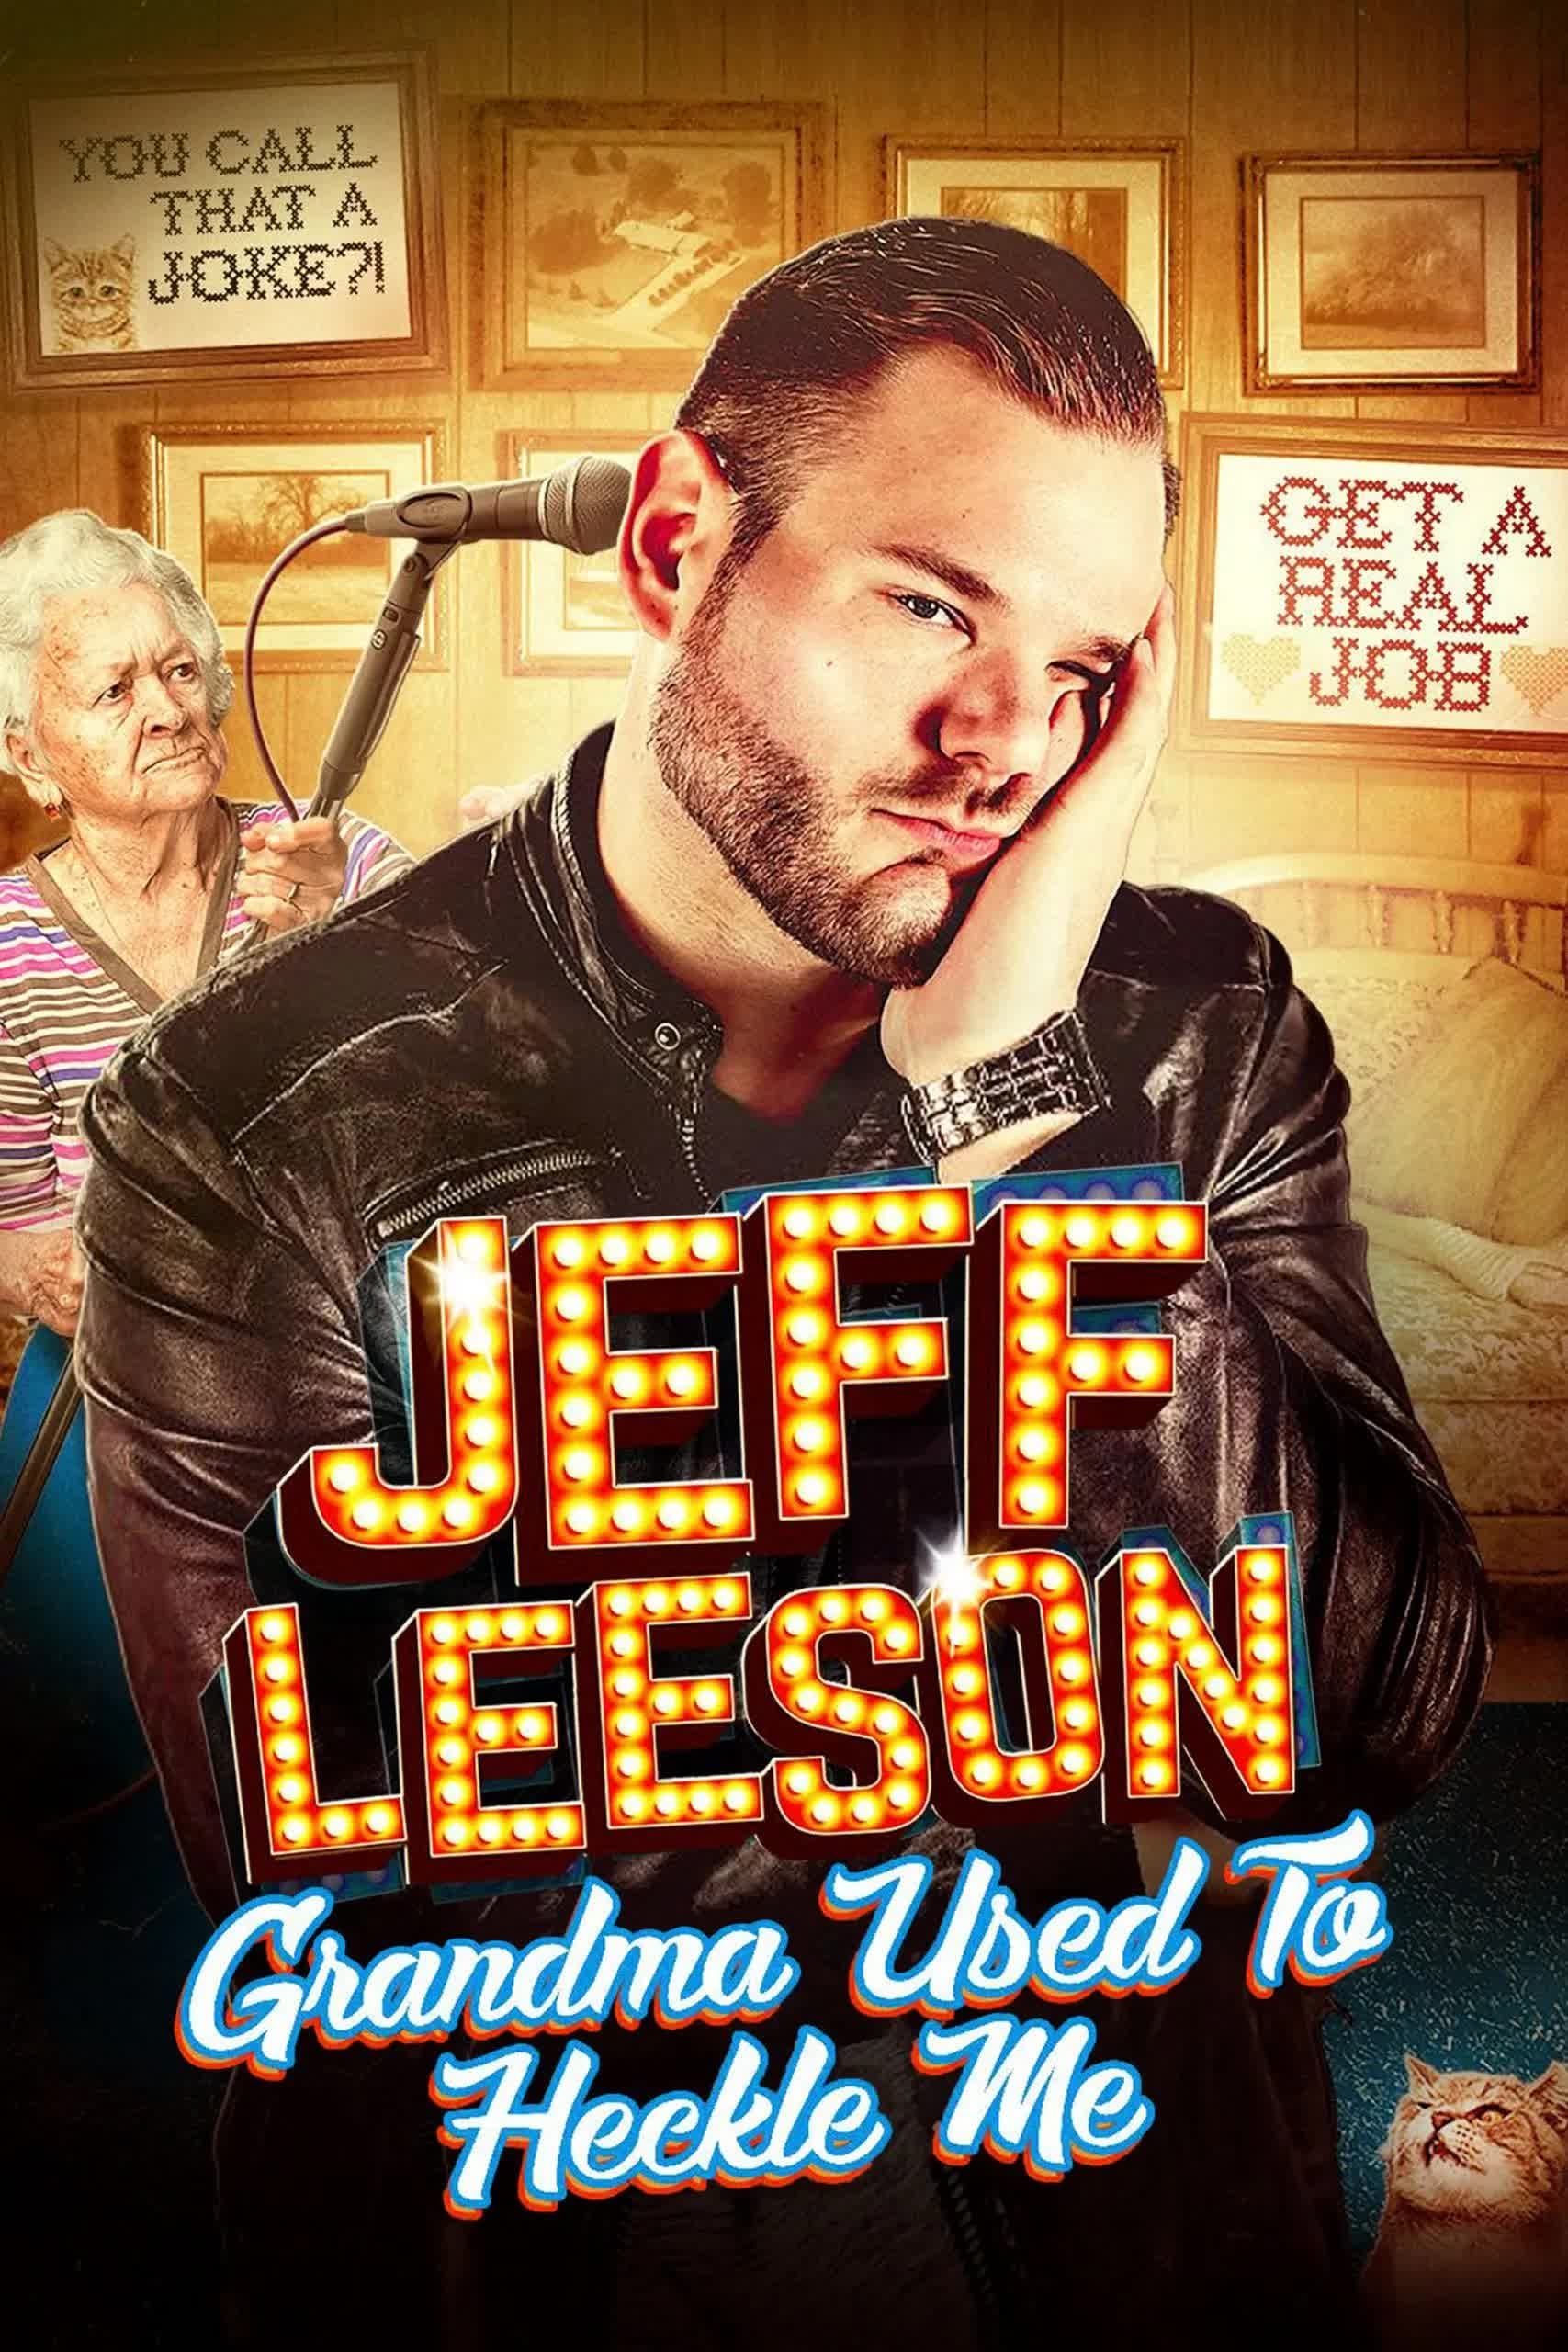 Jeff Leeson: Grandma Used to Heckle Me